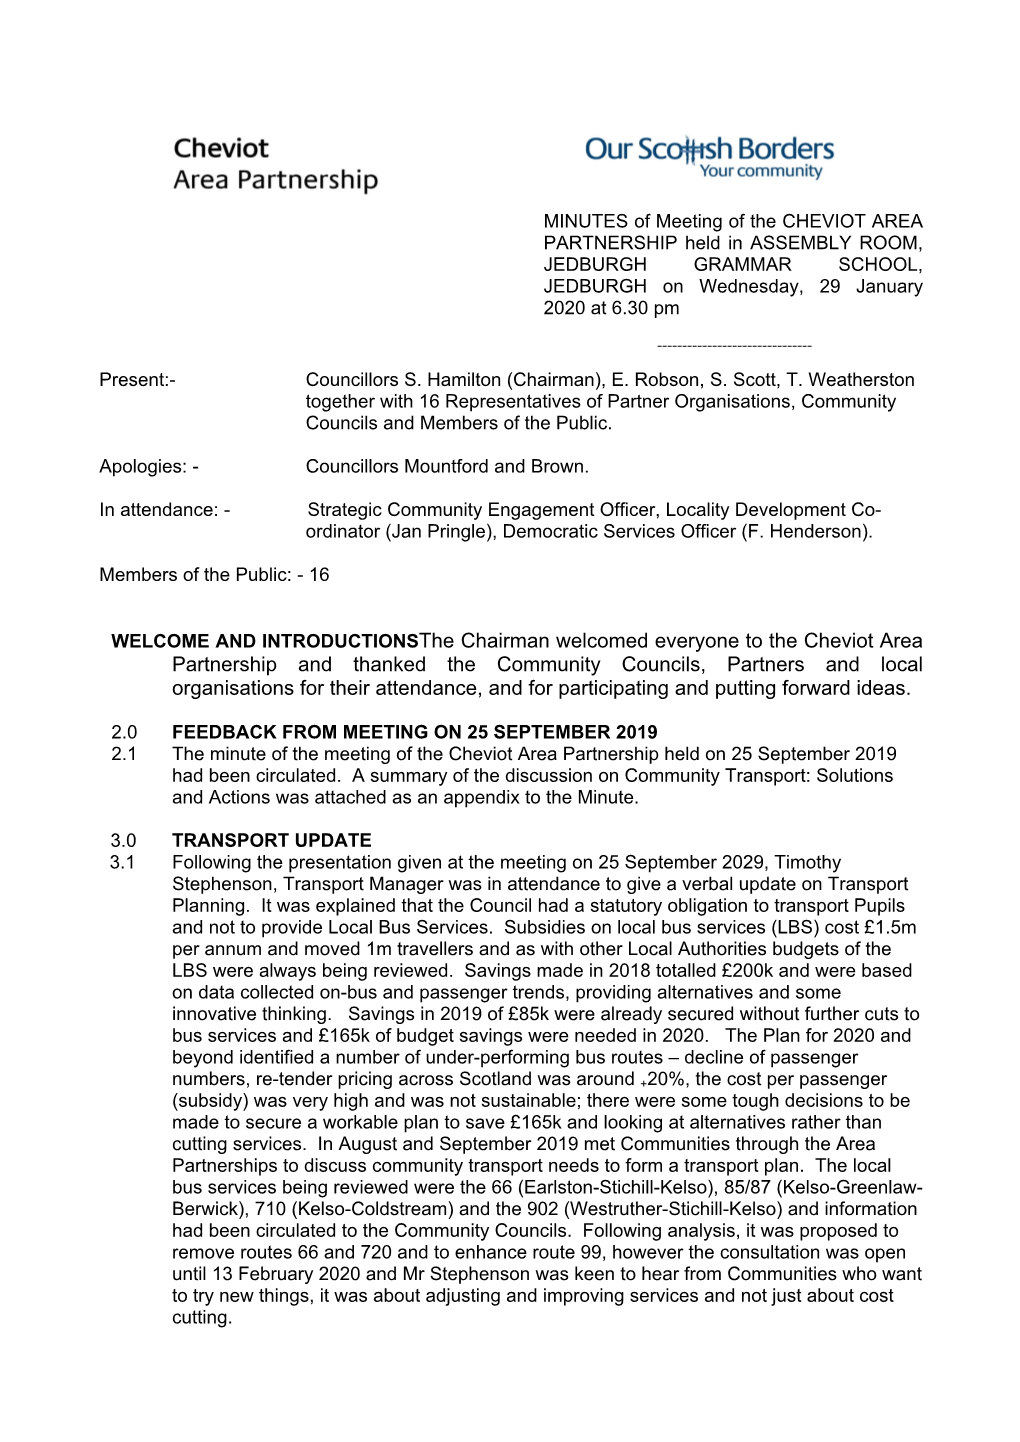 Printed Draft Minutes PDF 138 KB